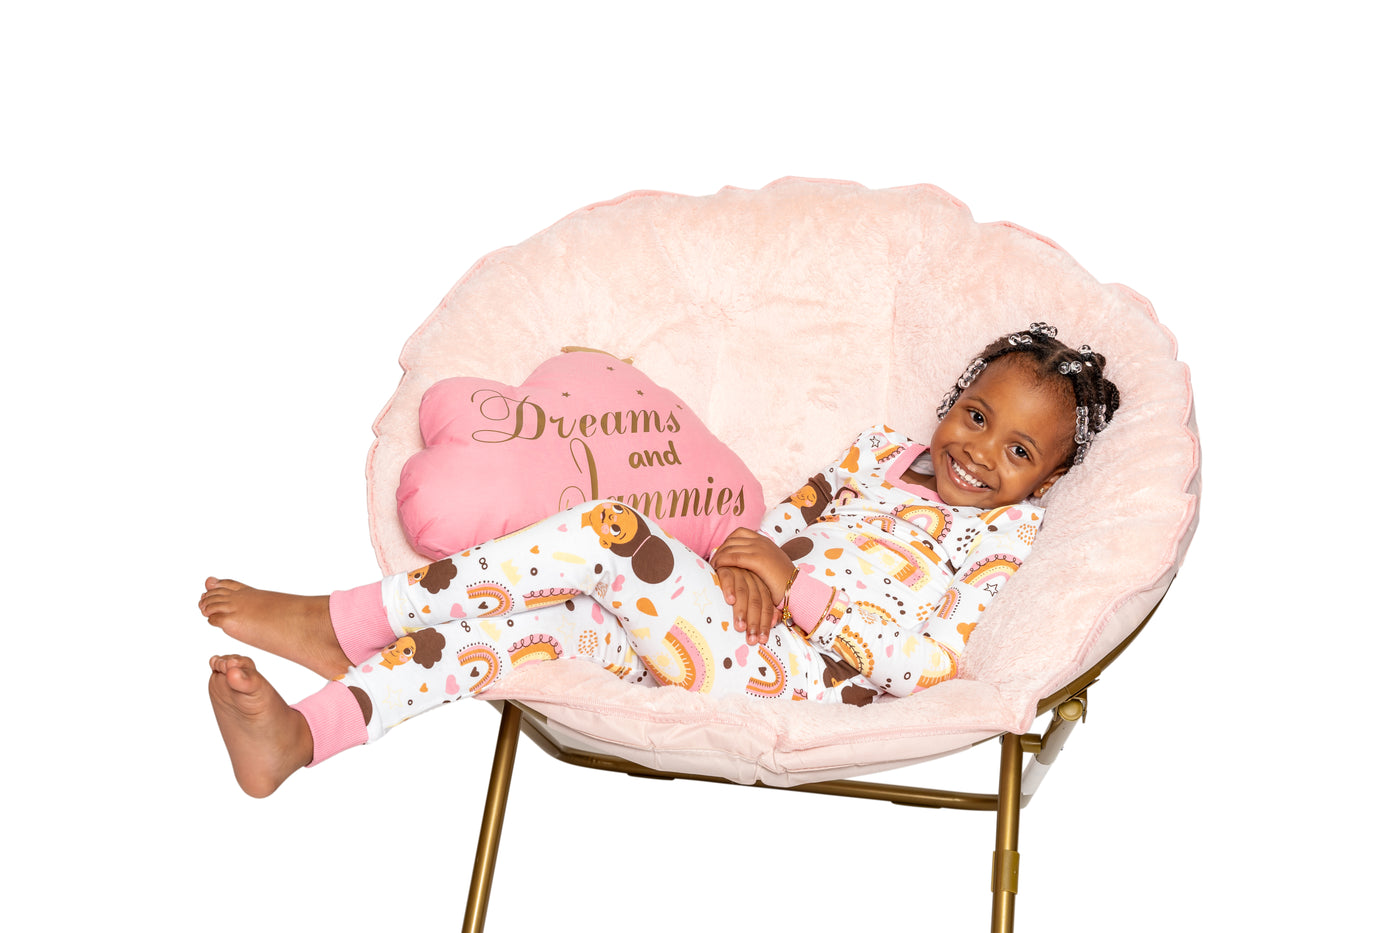 Afros and Rainbows Boho Snug Fit Pajamas Set Girls Toddler Size 4T - 12